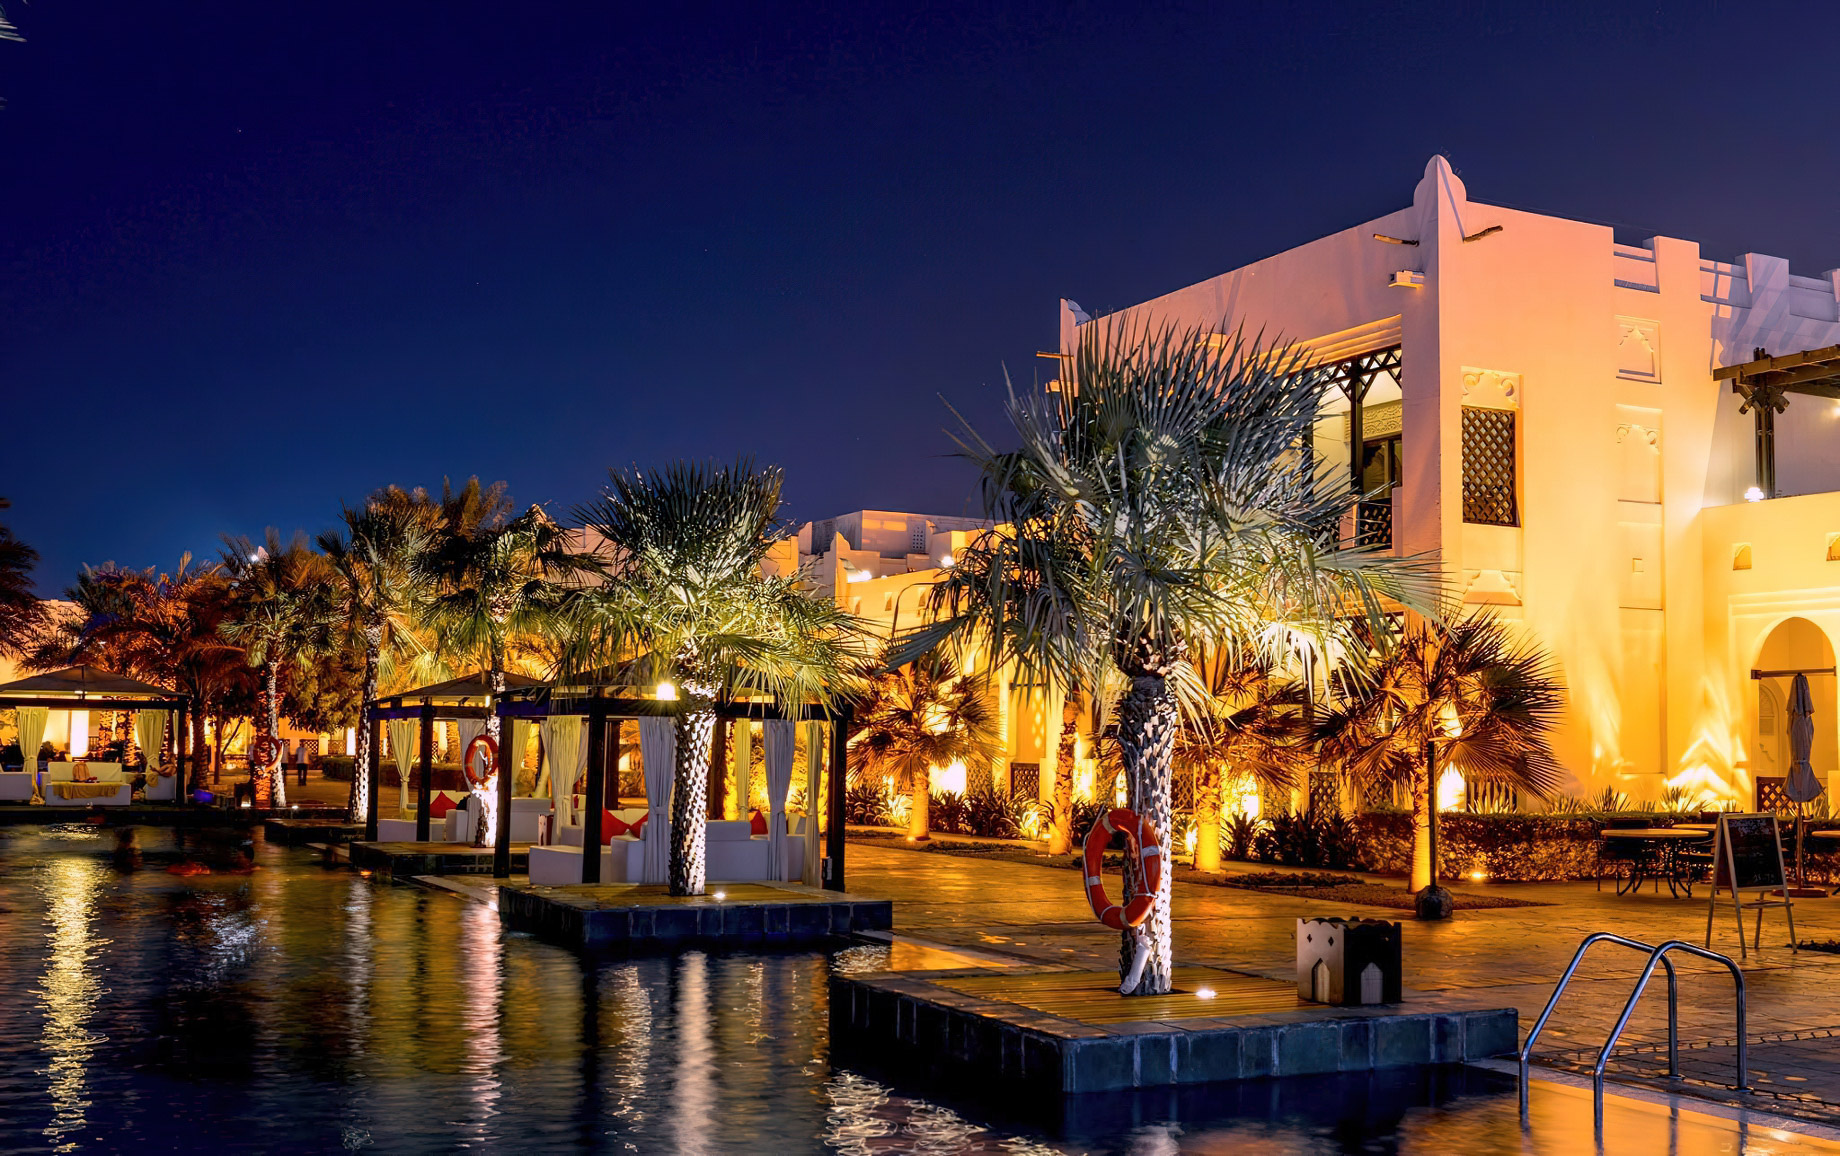 Sharq Village & Spa, A Ritz-Carlton Hotel - Doha, Qatar - Pool Deck Night View